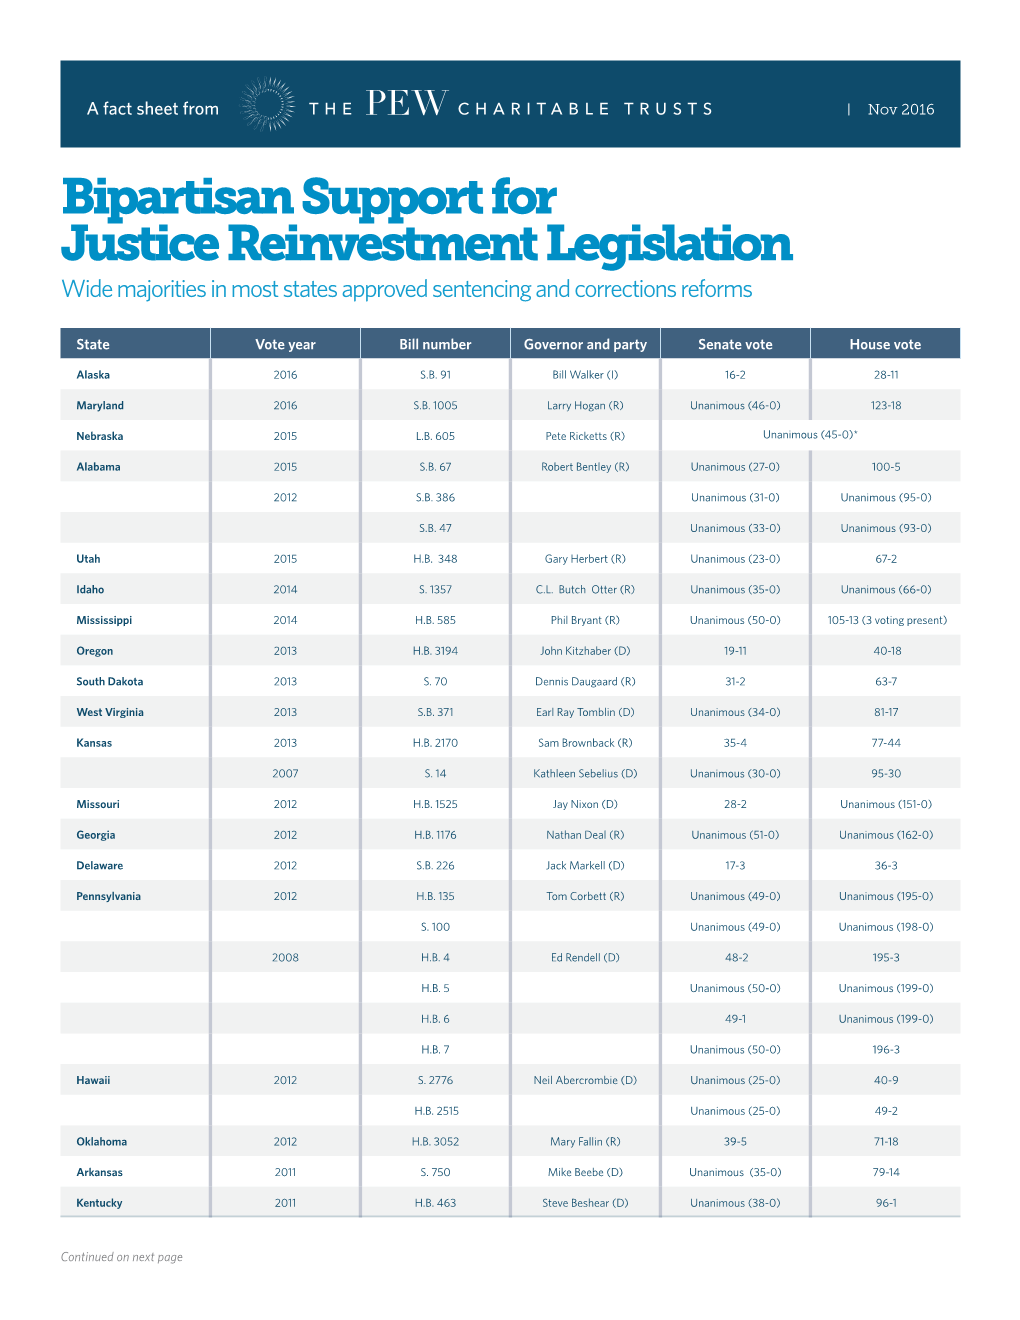 Bipartisan Support for Justice Reinvestment Legislation (PDF)